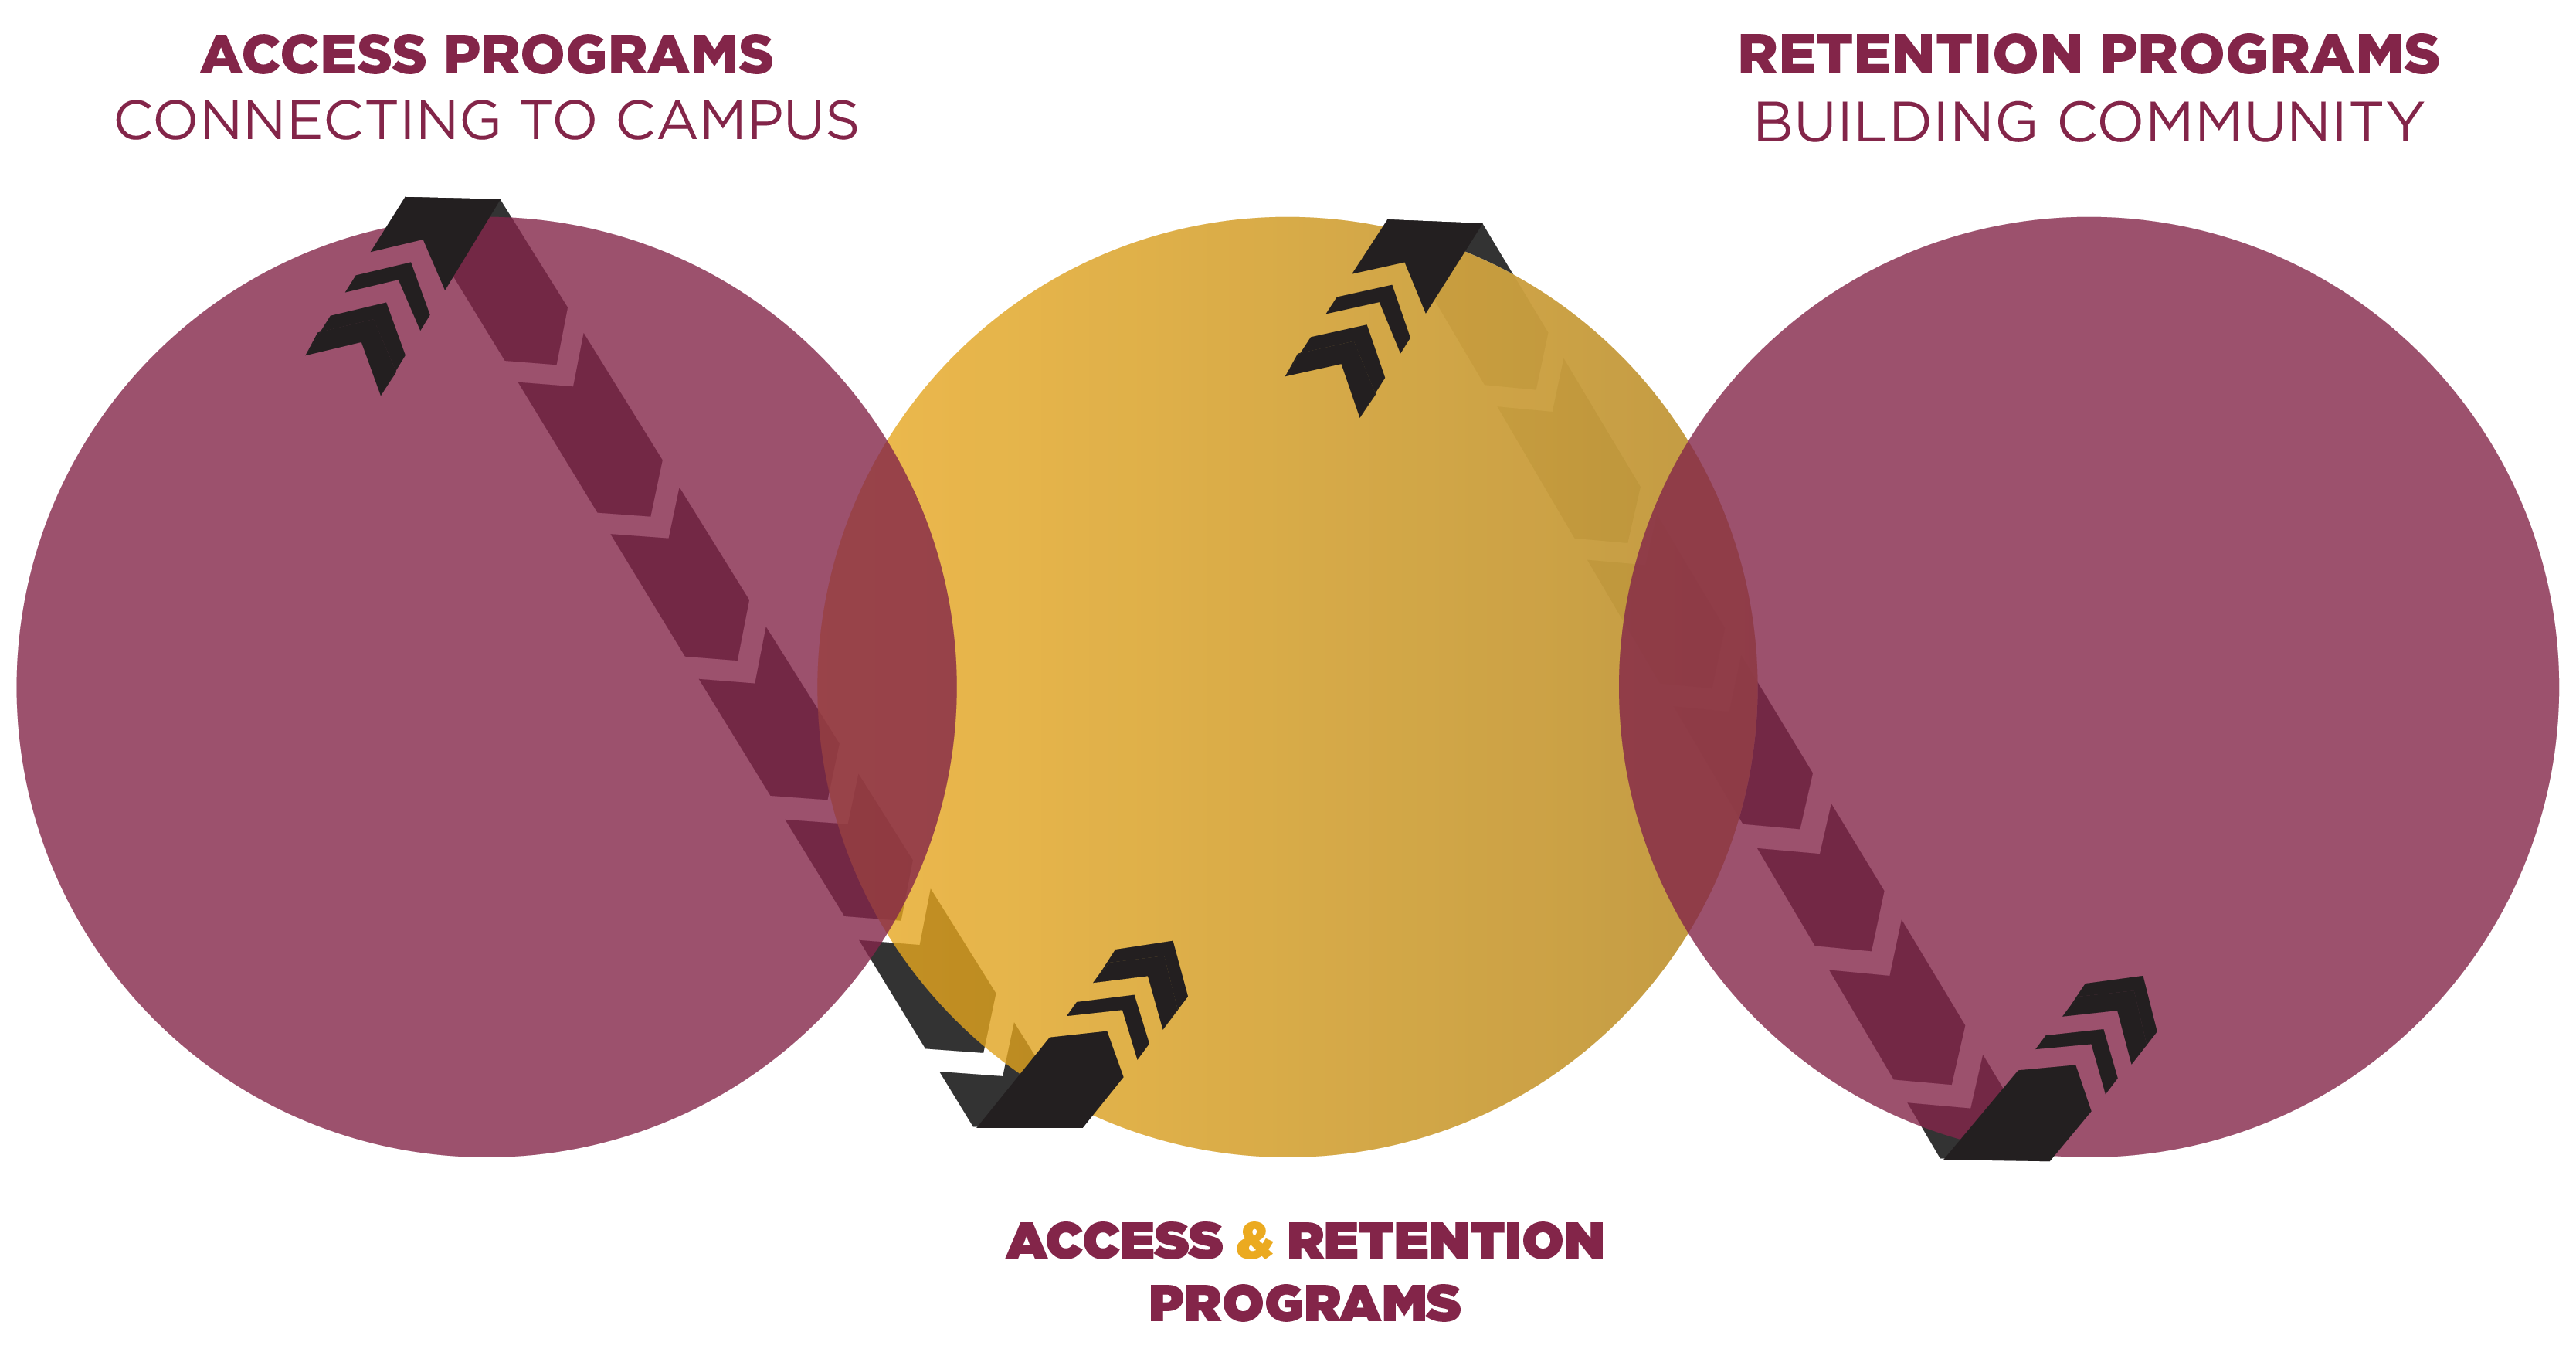 Access & Retention Programs Diagram: Access Programs Connecting To Campus and Retention Programs Building Community